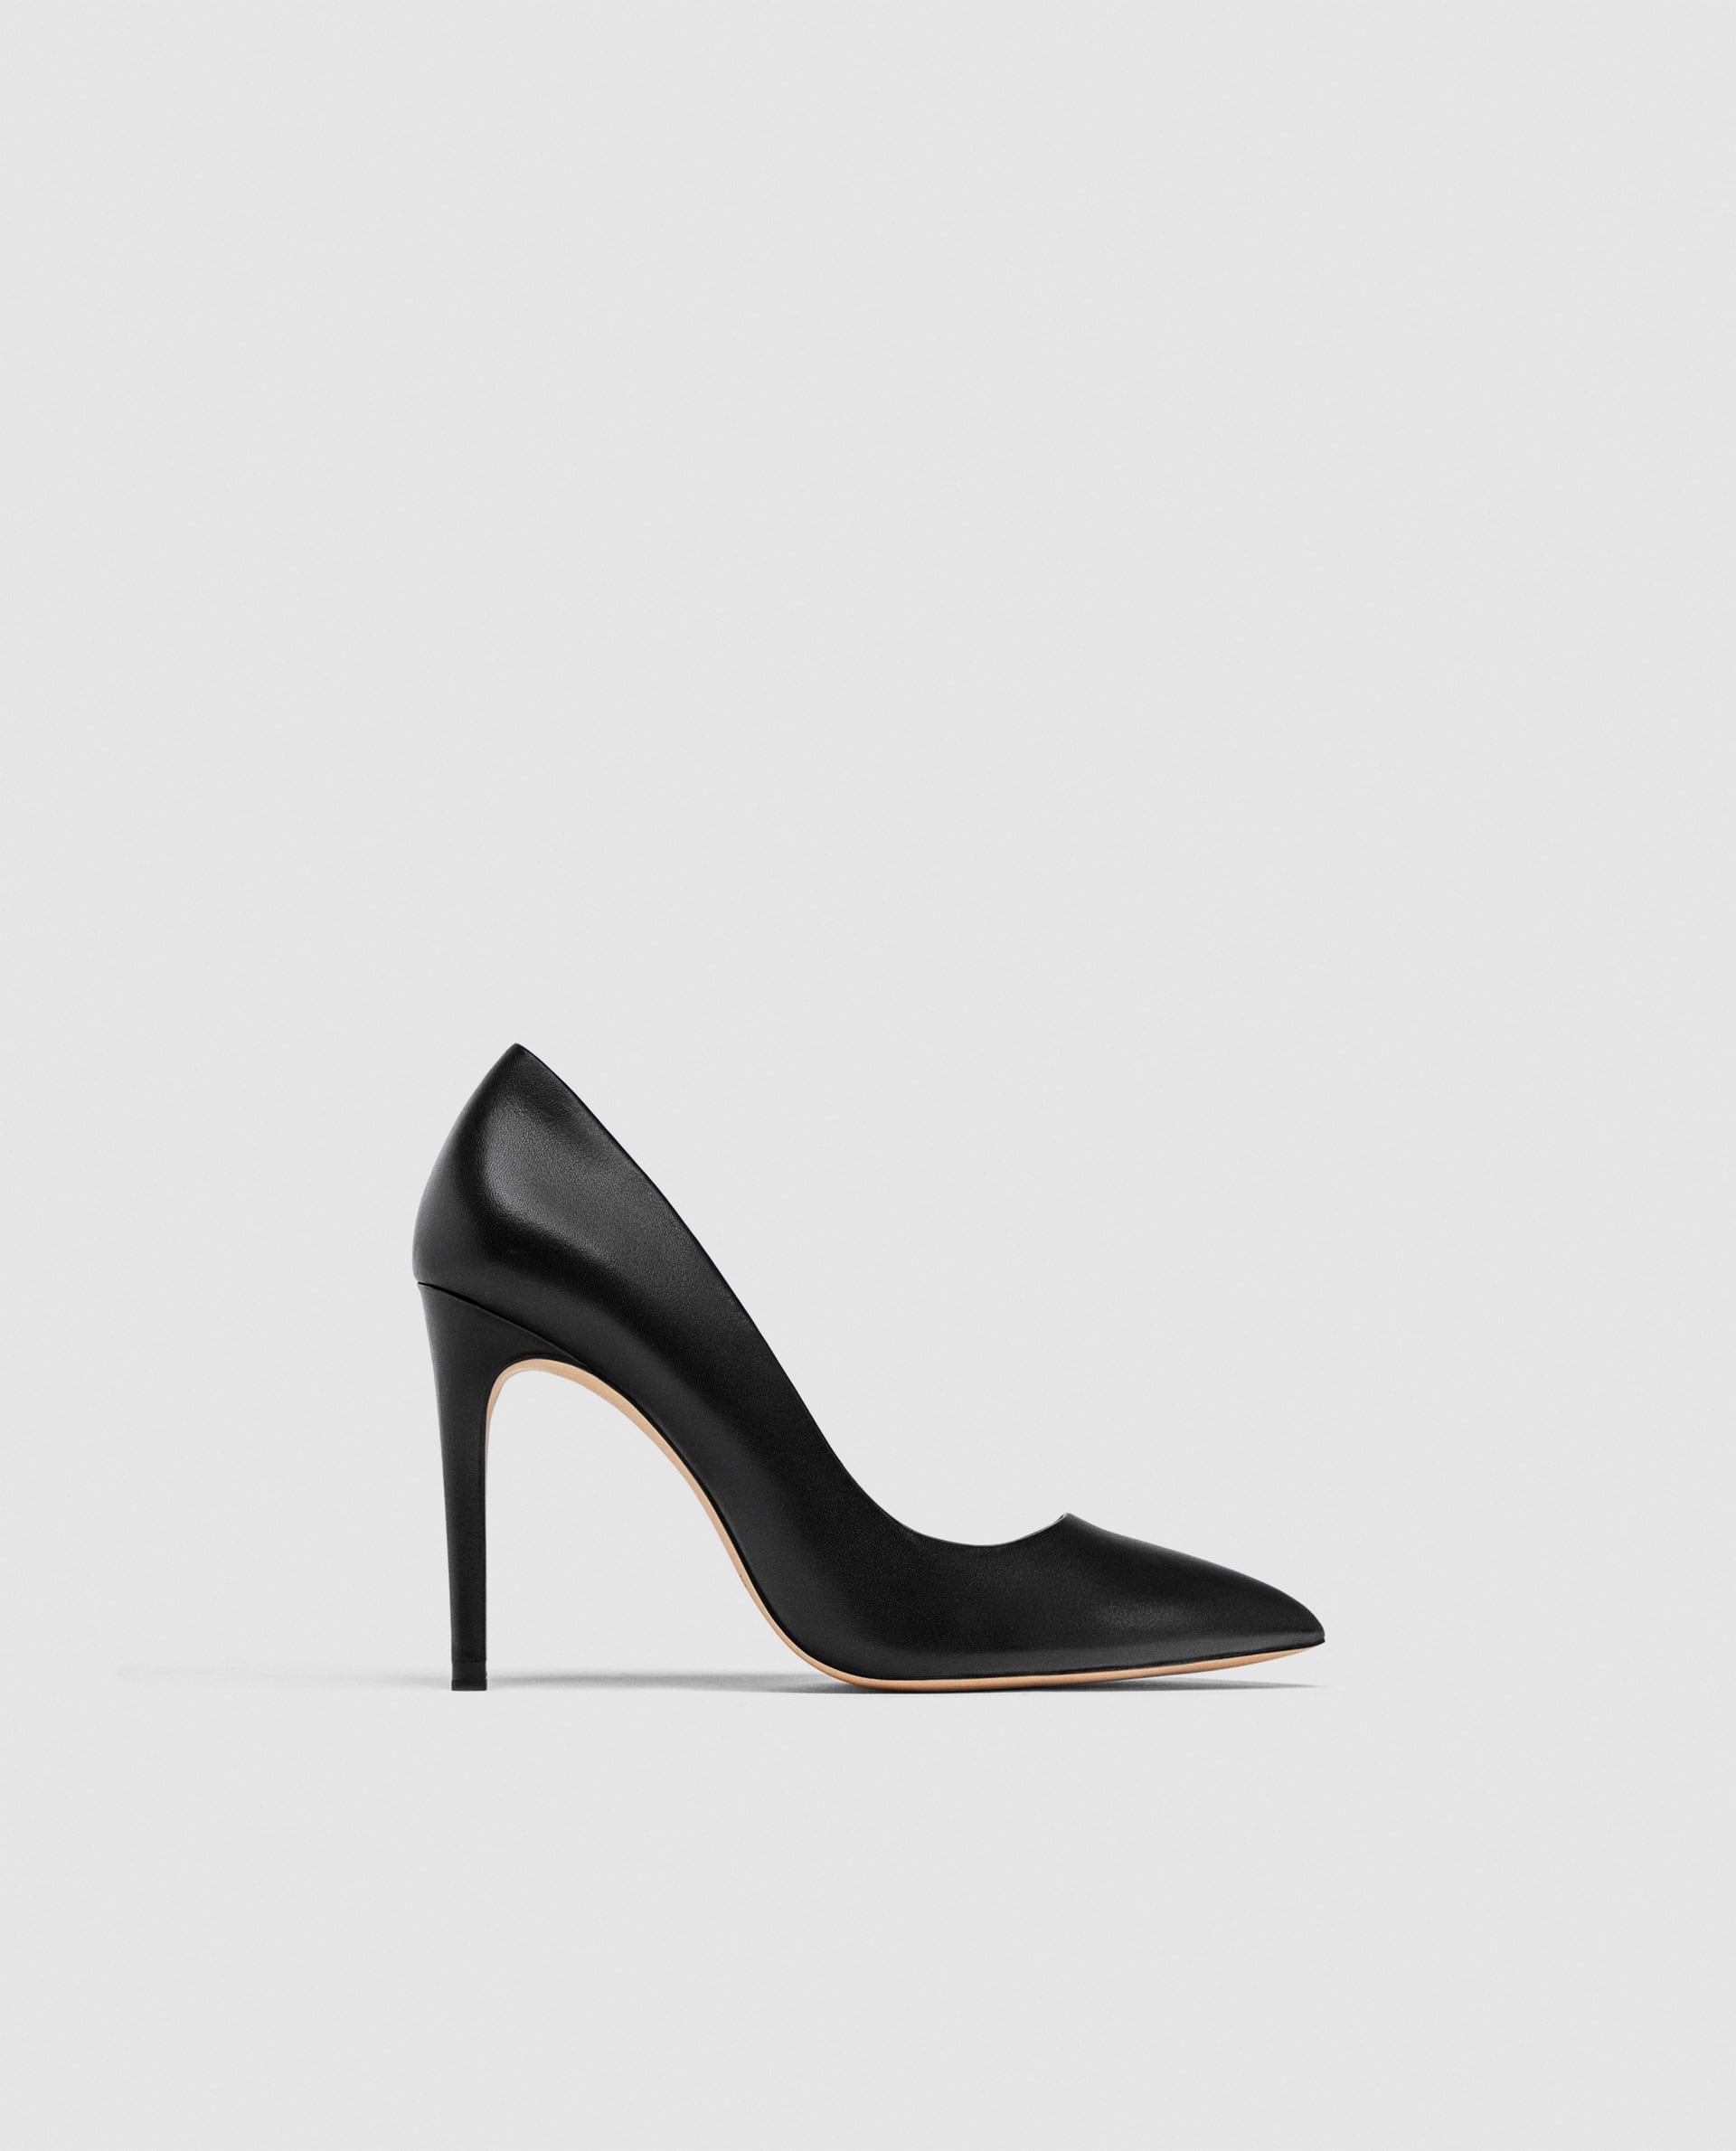 Image 2 Of High Heel Leather Court Shoes From Zara Absatz Pumps Schuhe Damen